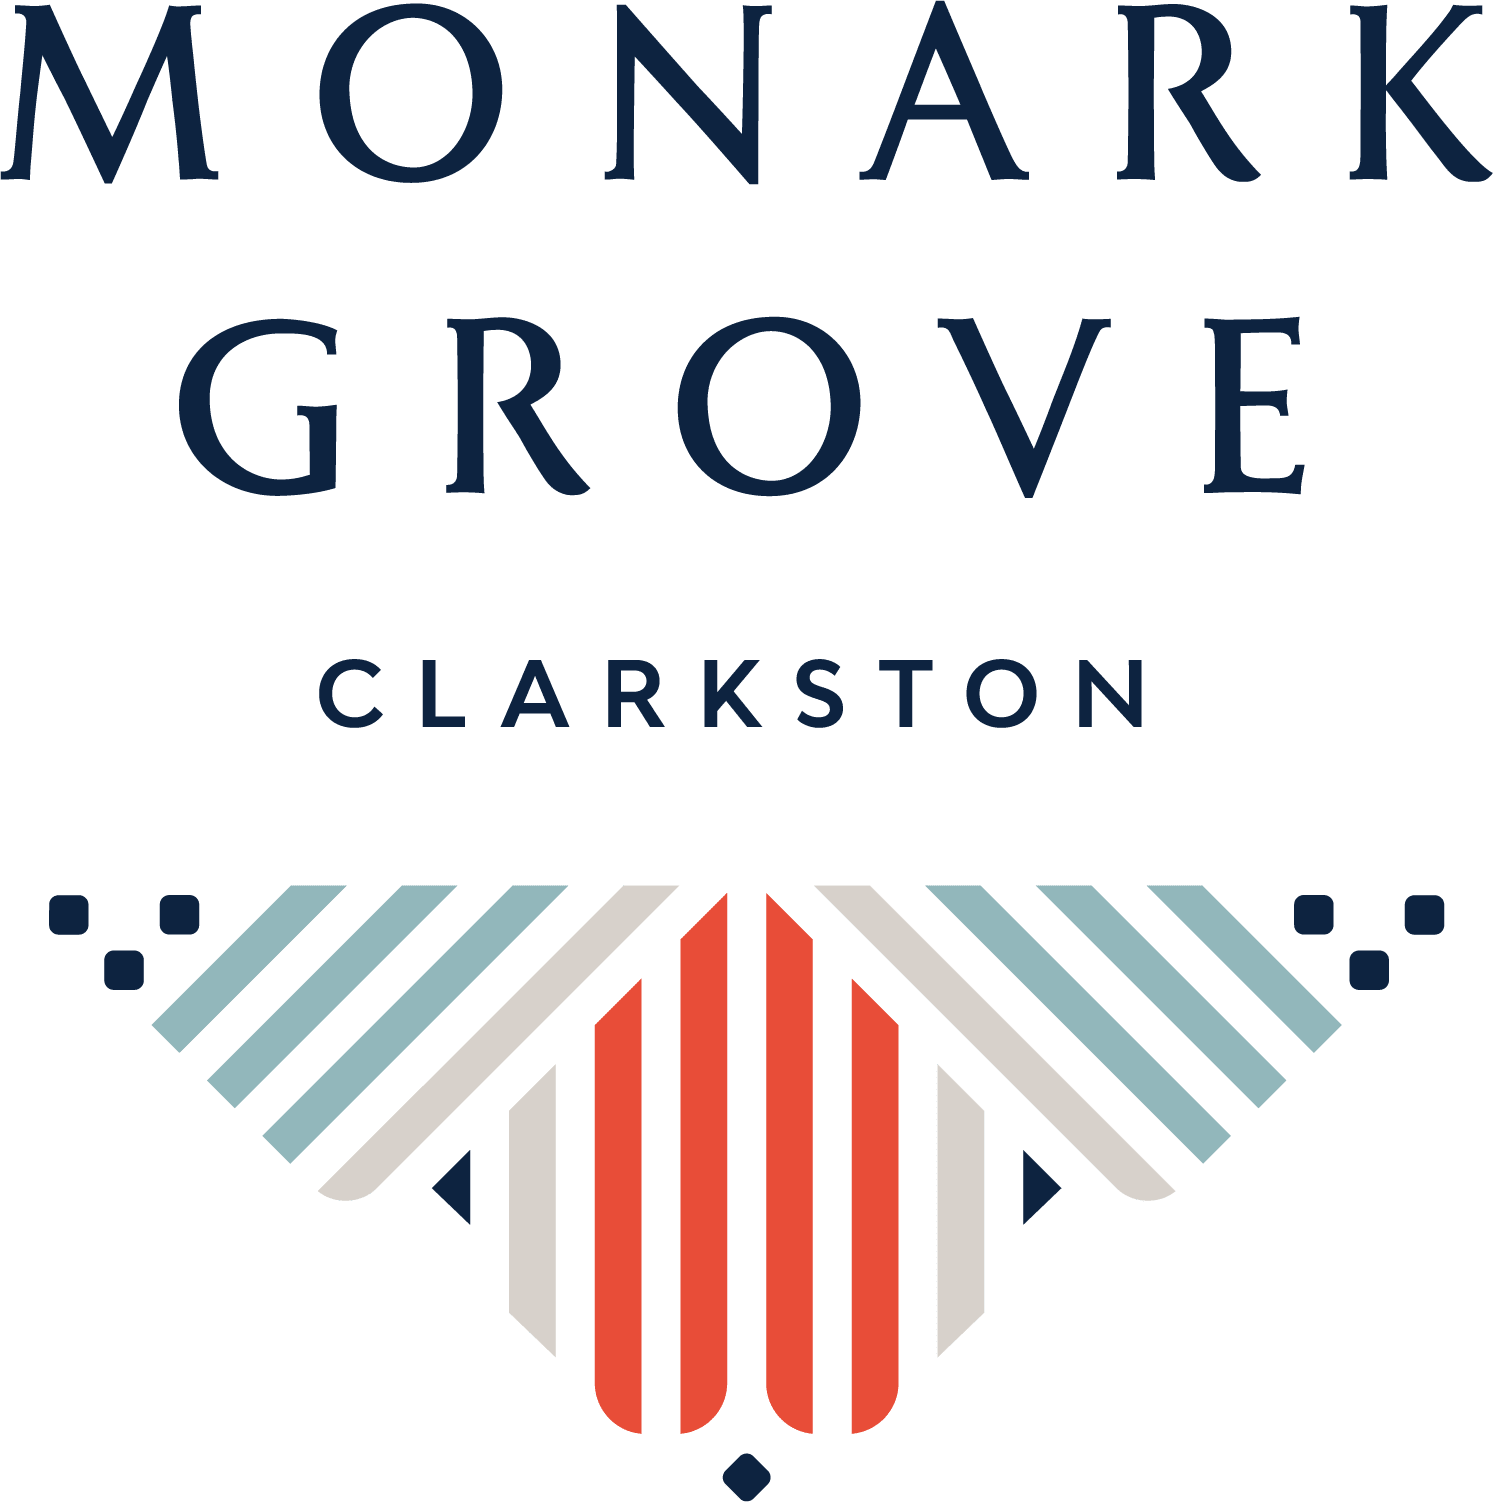 Monark Grove Clarkston logo